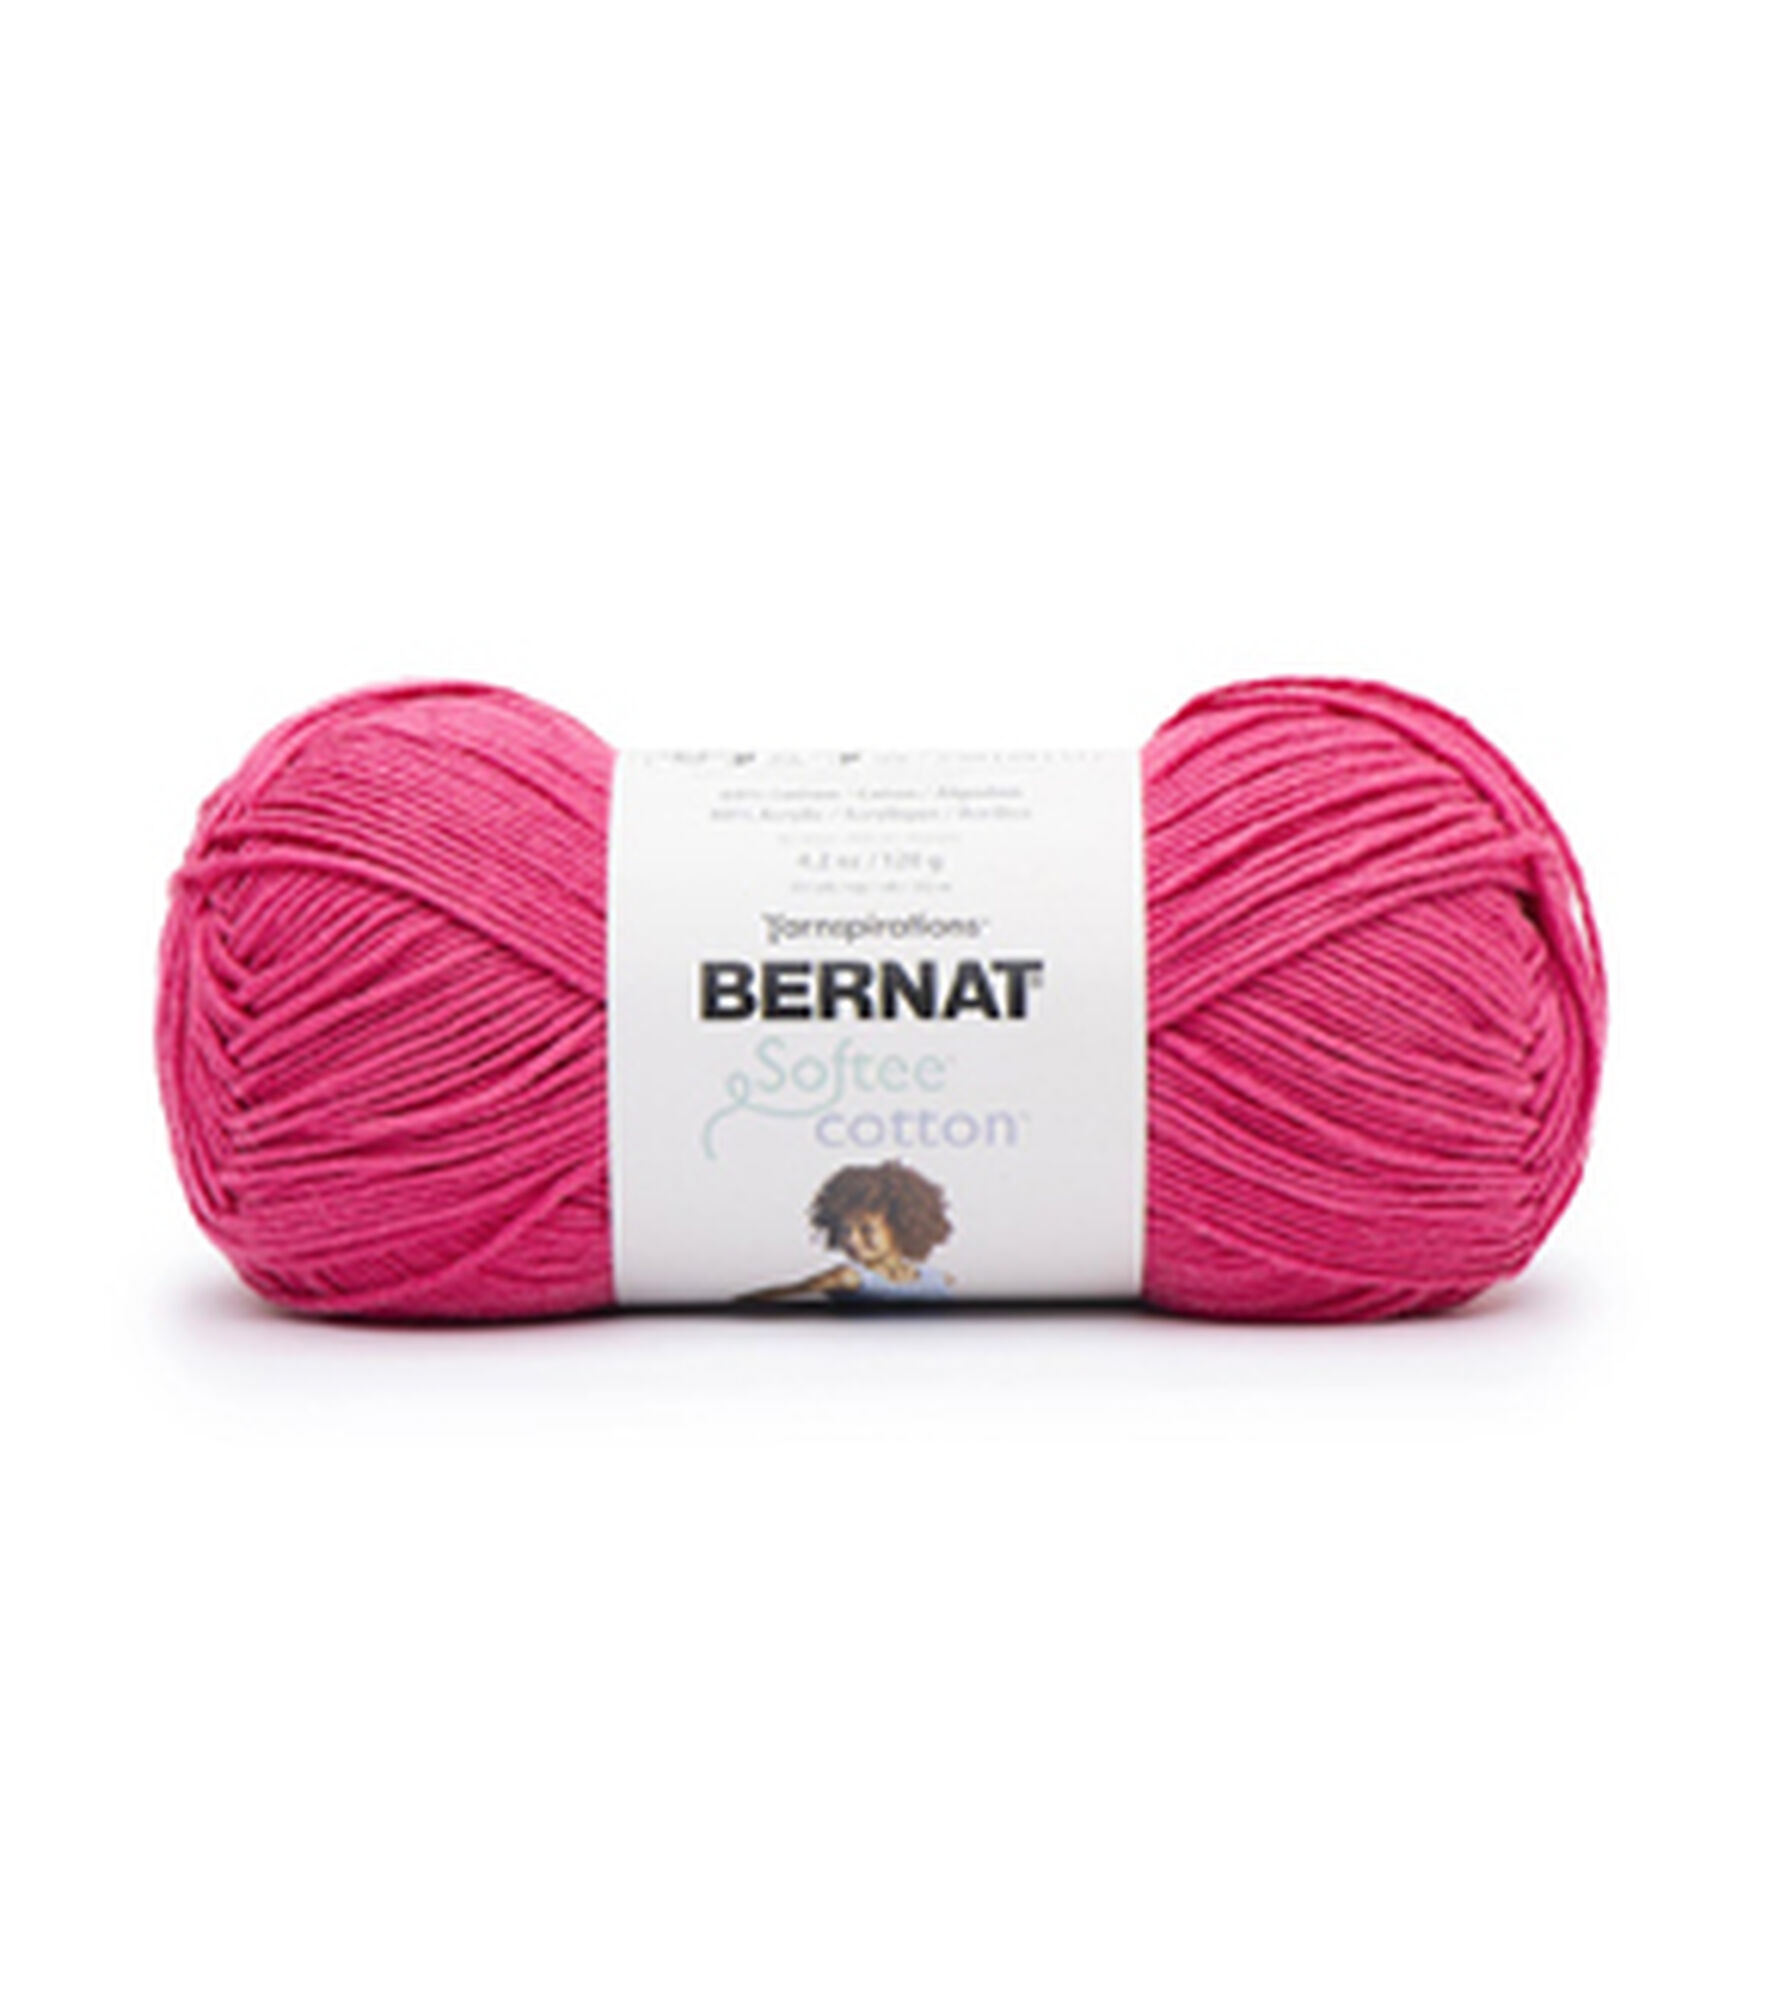 Bernat Softee Baby Yarn - Soft Red